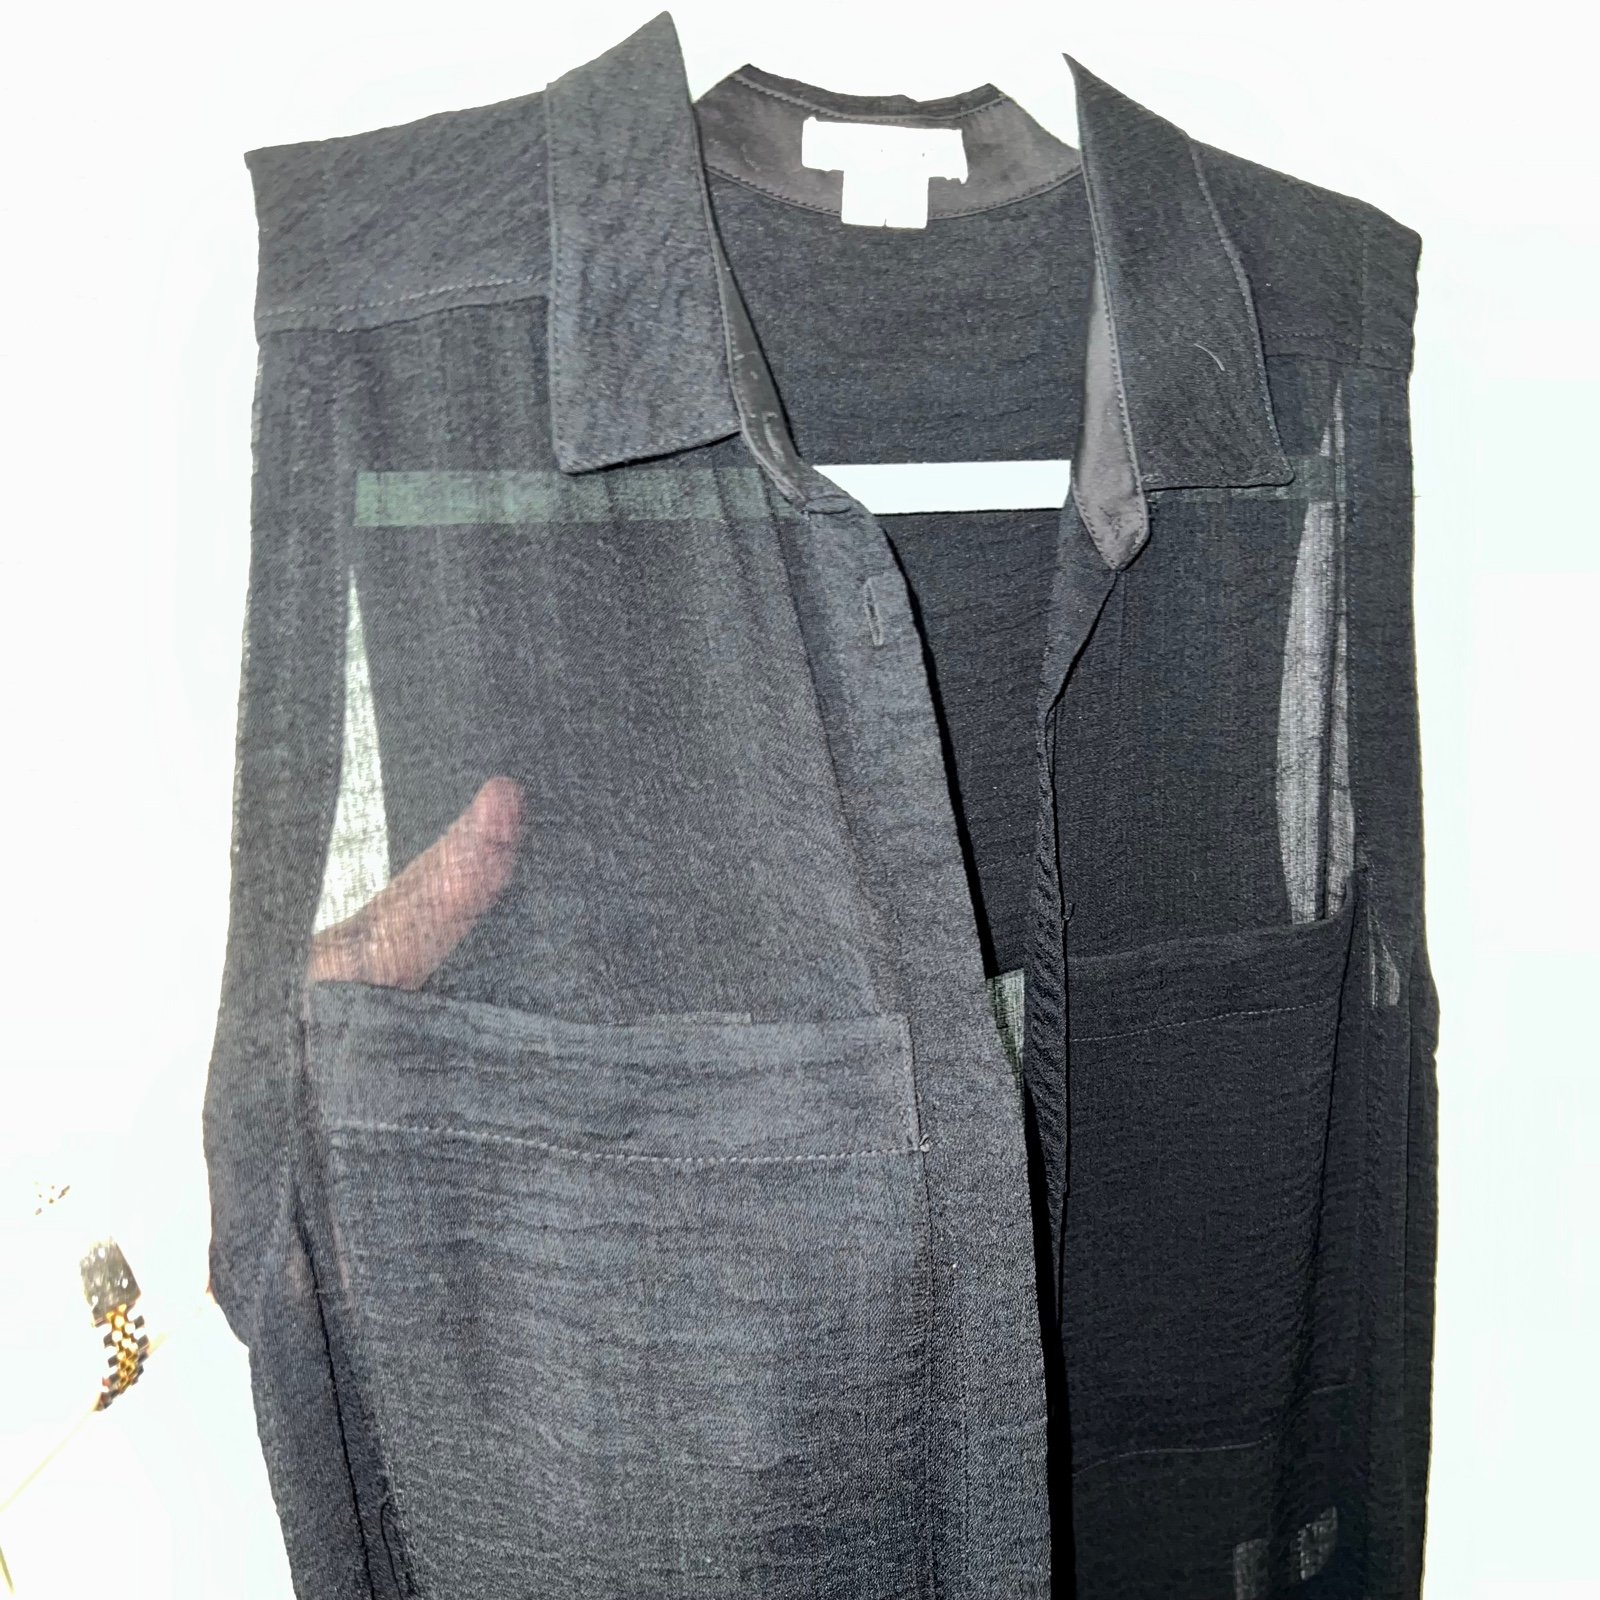 Popular Helmut Lang Black Semi-Sheer Coverup Dress MhoLWvOkQ Discount